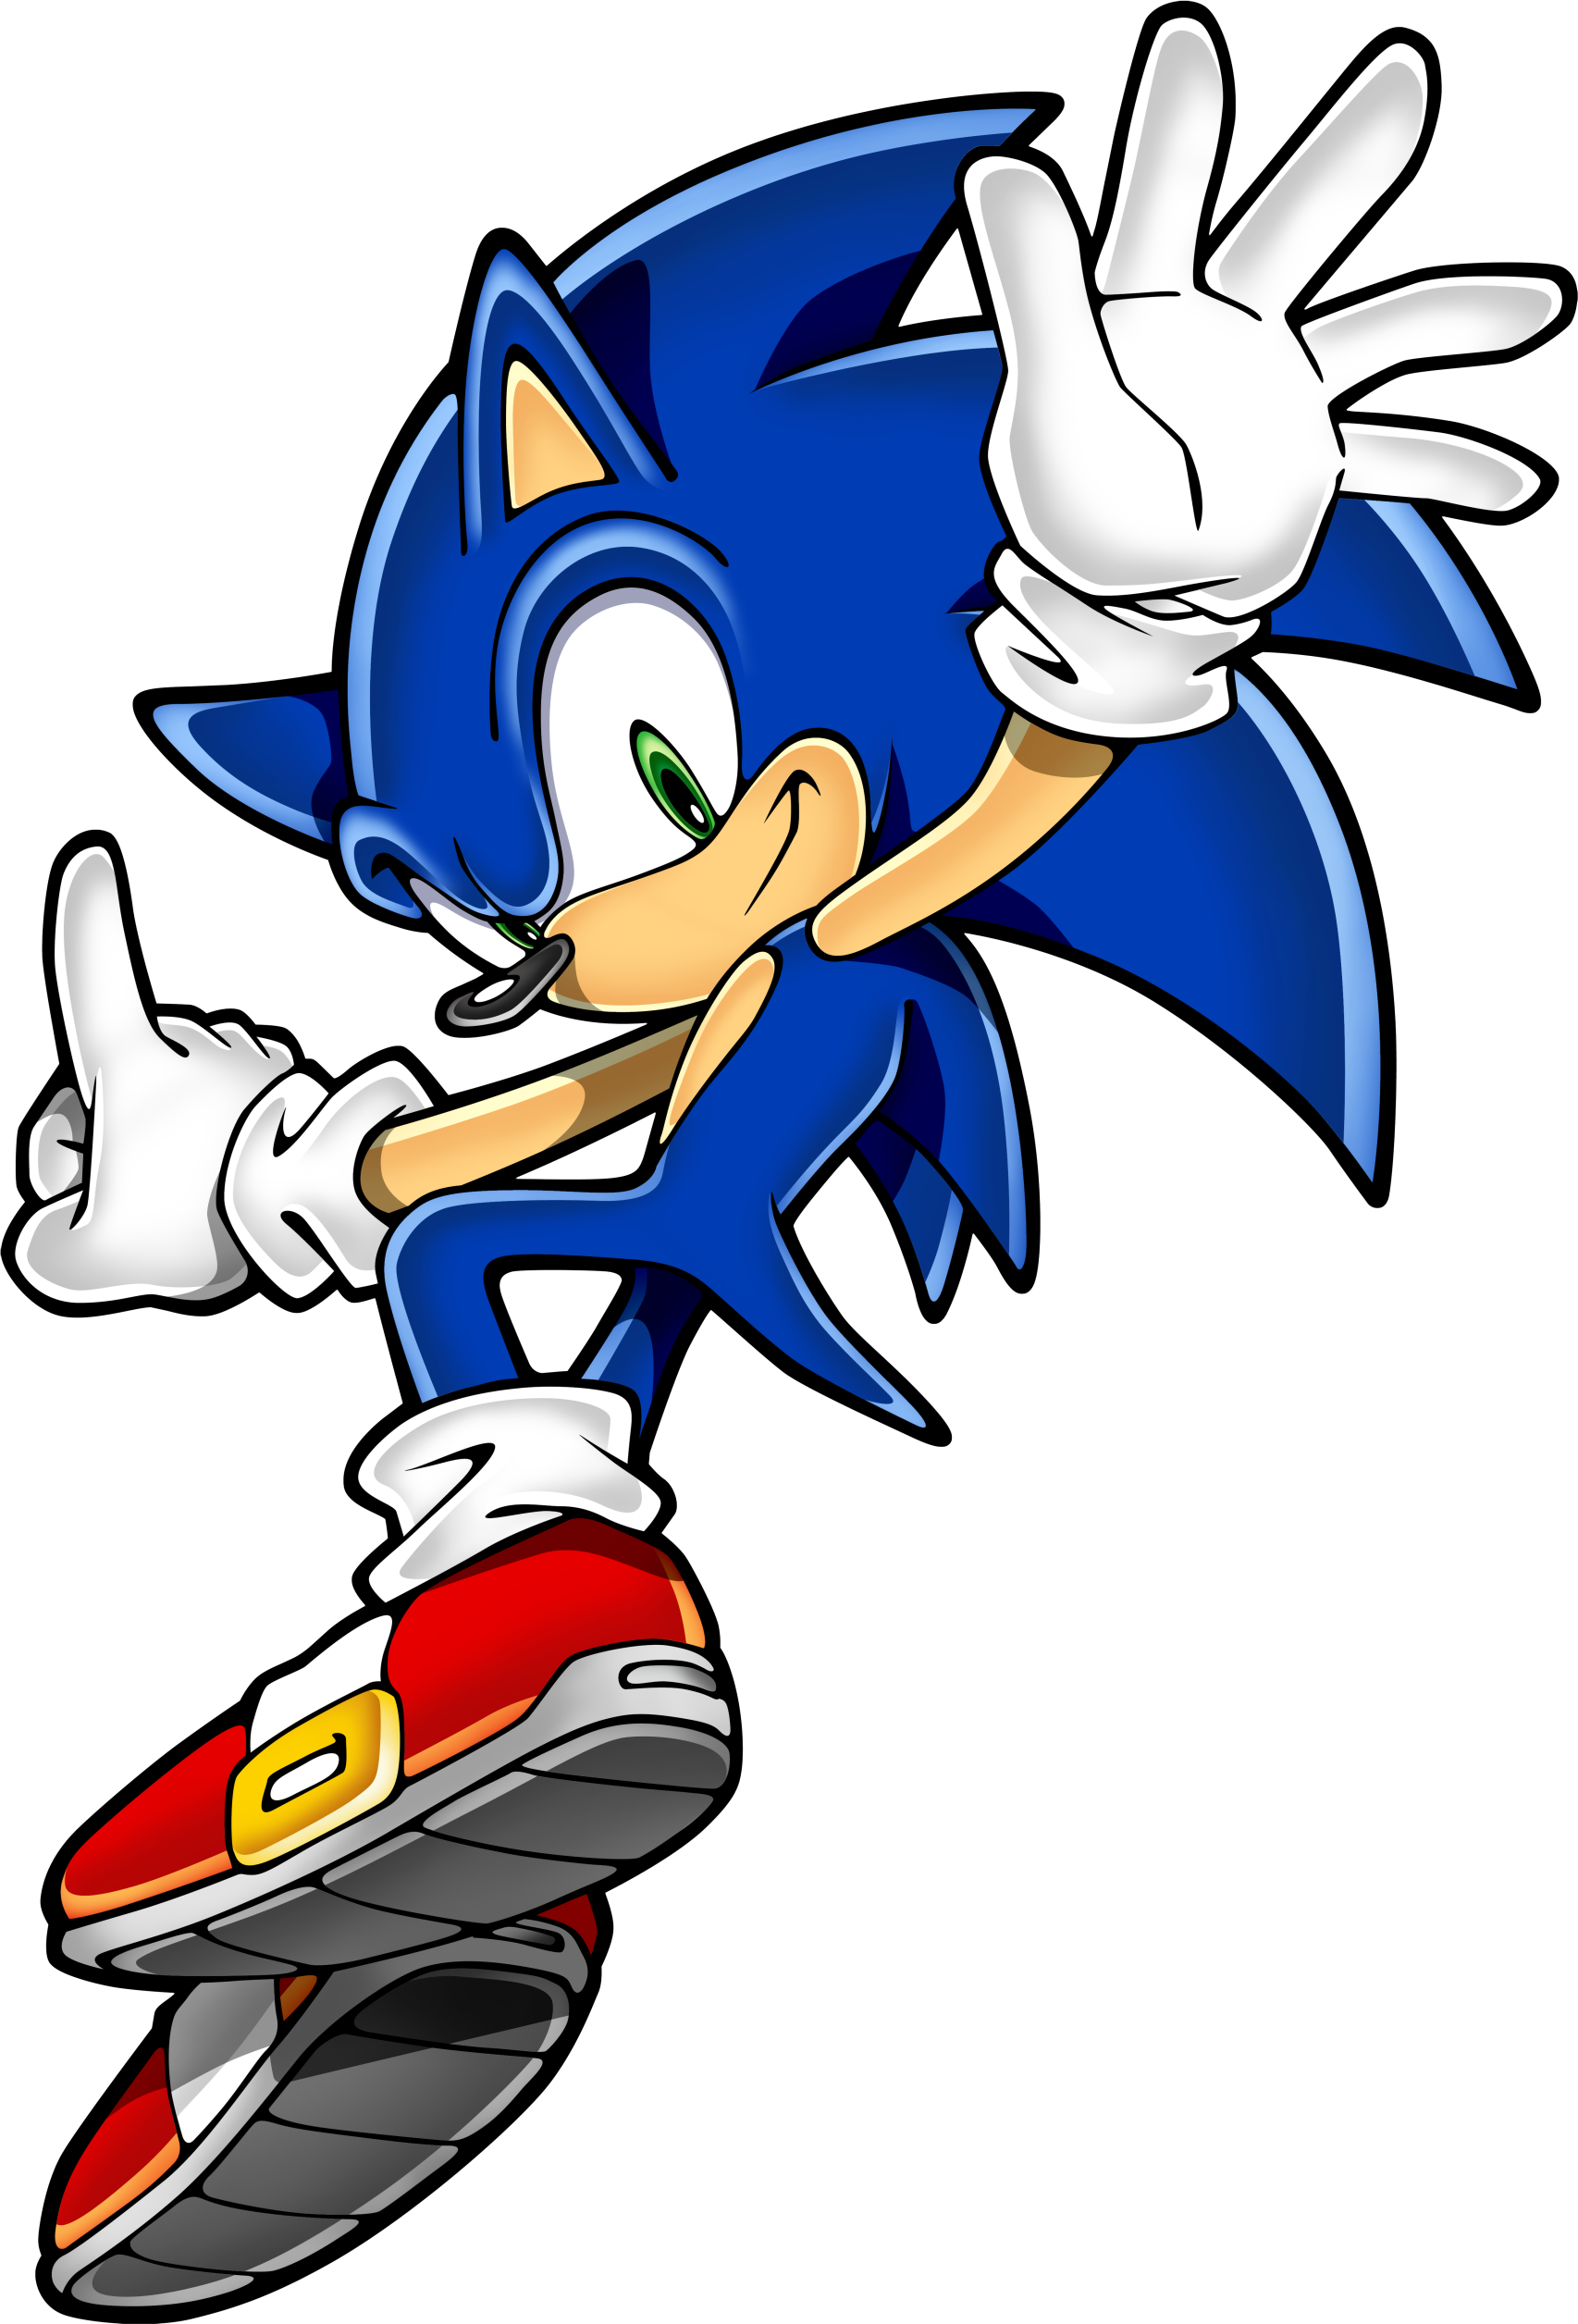 Download Sonic The Hedgehog Png 12 Hq Png Image Freepngimg